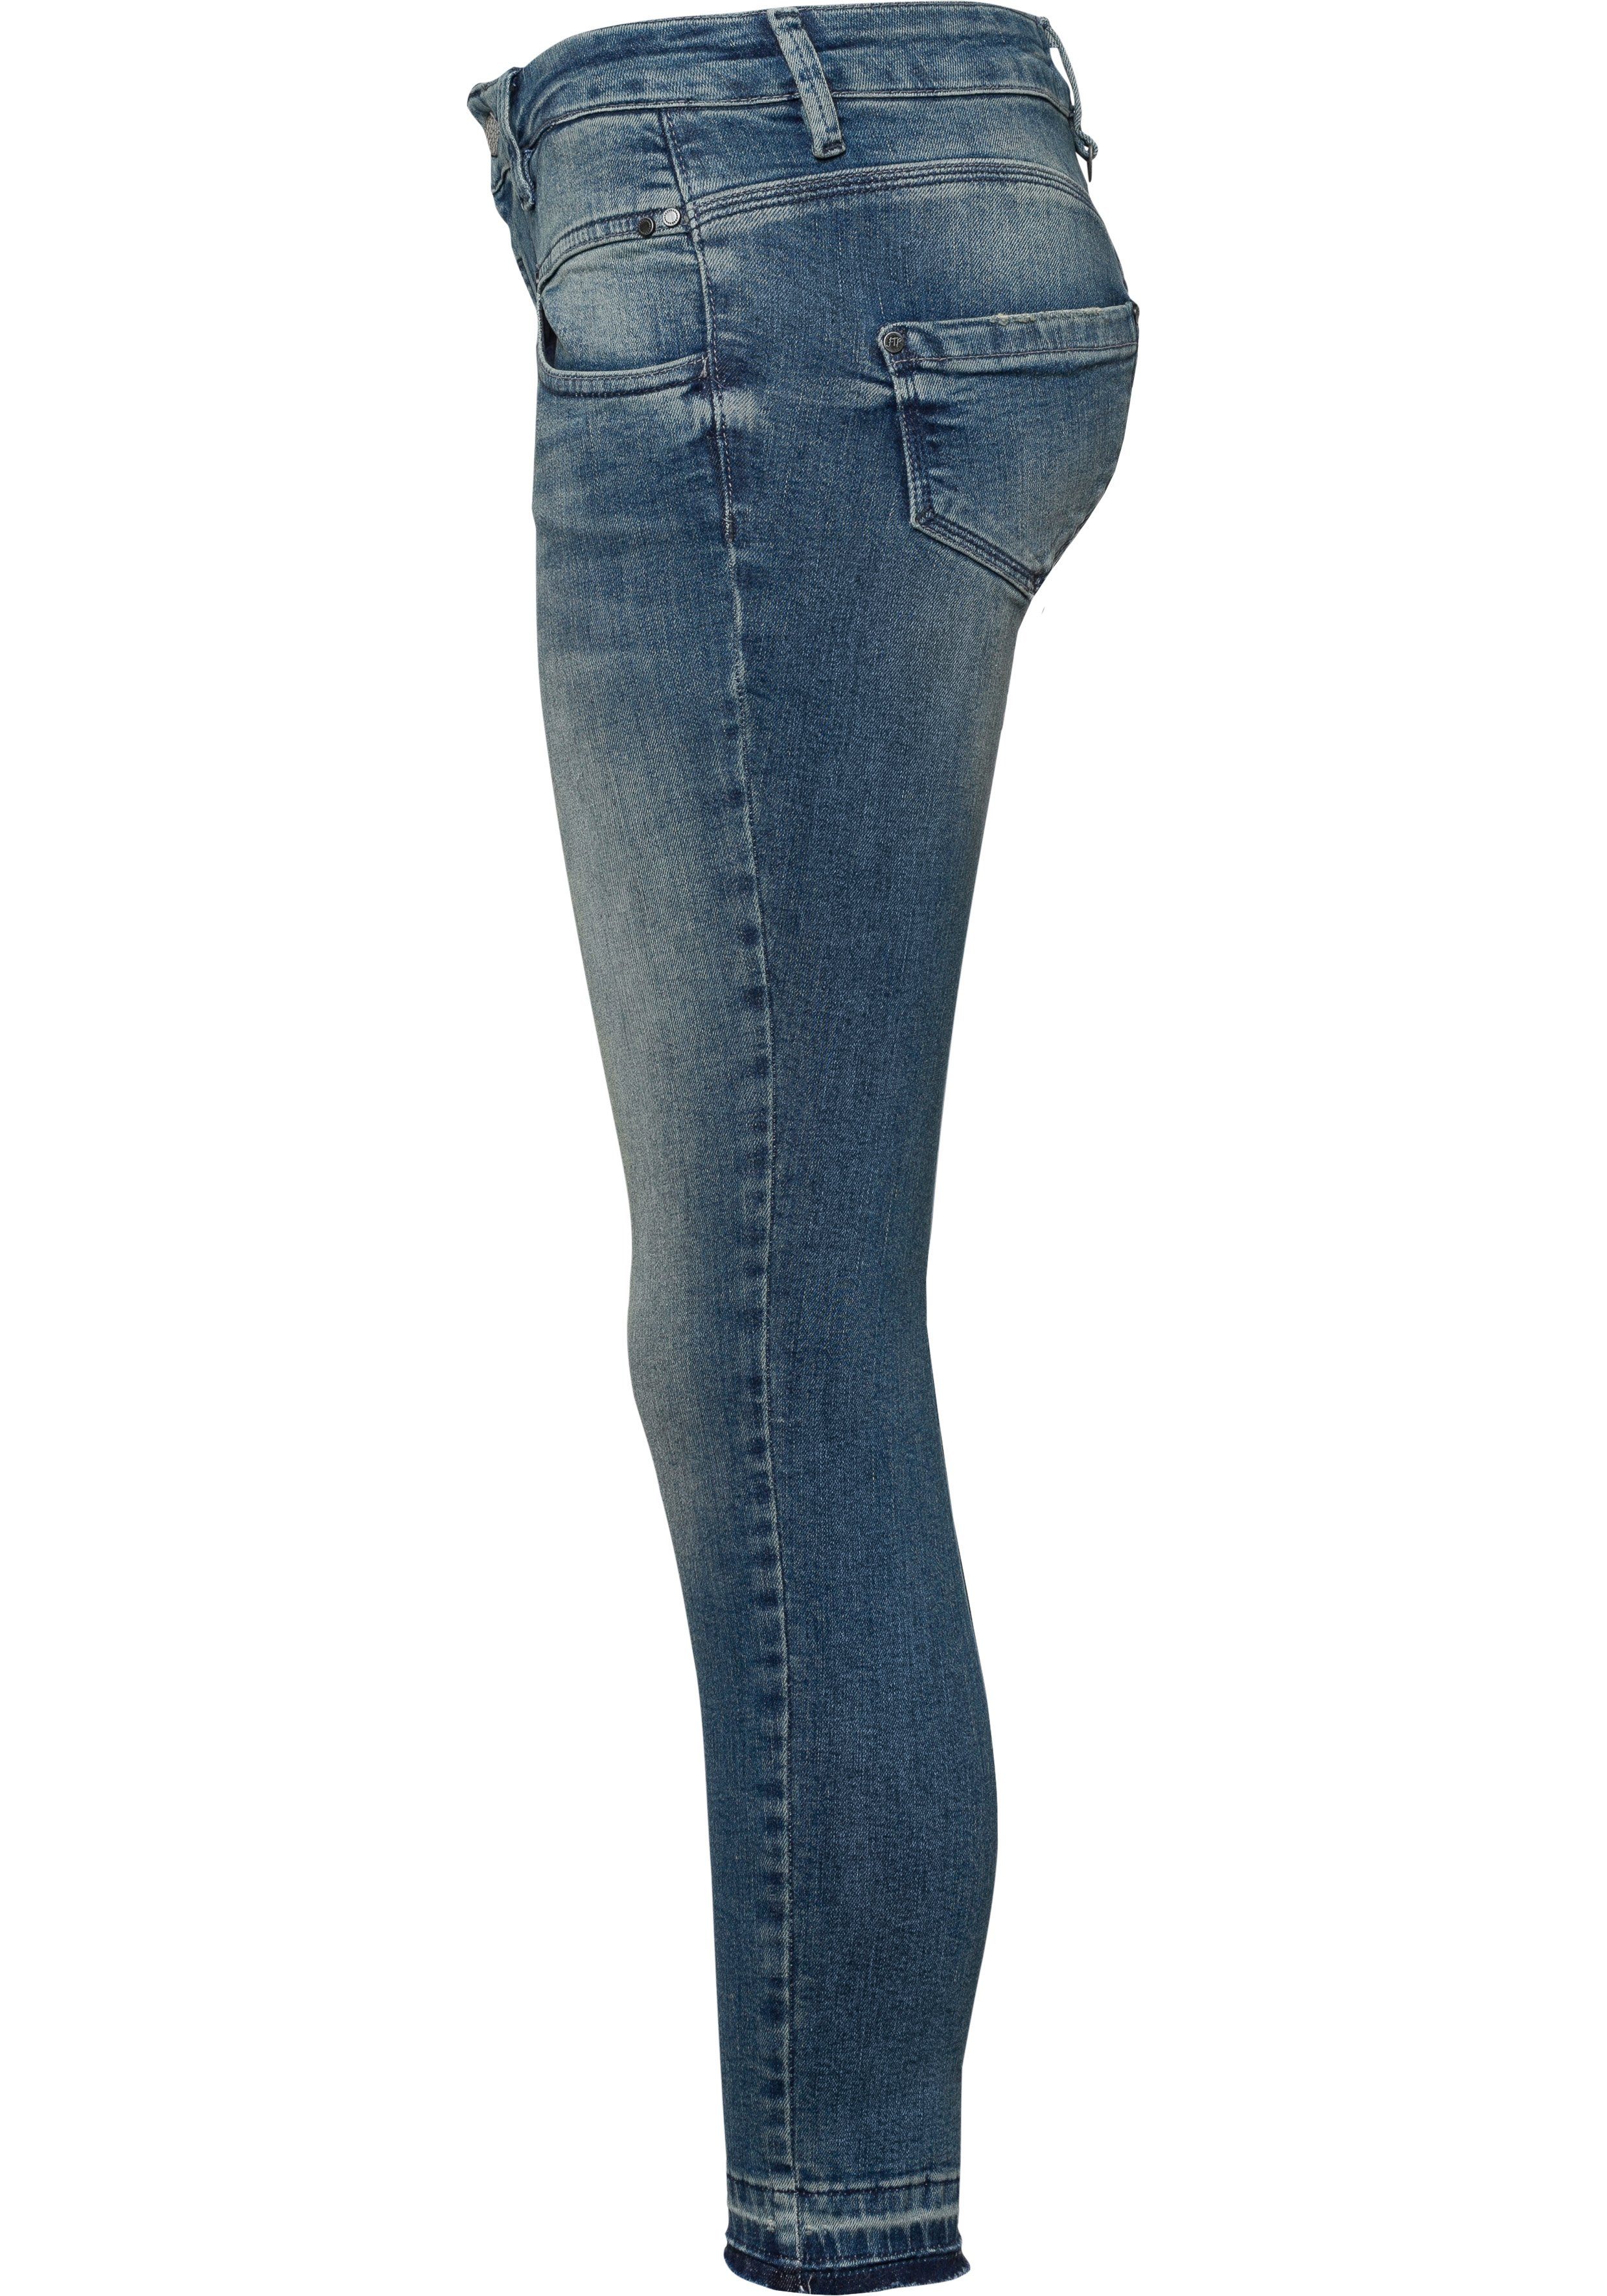 Reißverschluss used der blue Skinny-fit-Jeans an Porter T. Freeman Coinpocket mit